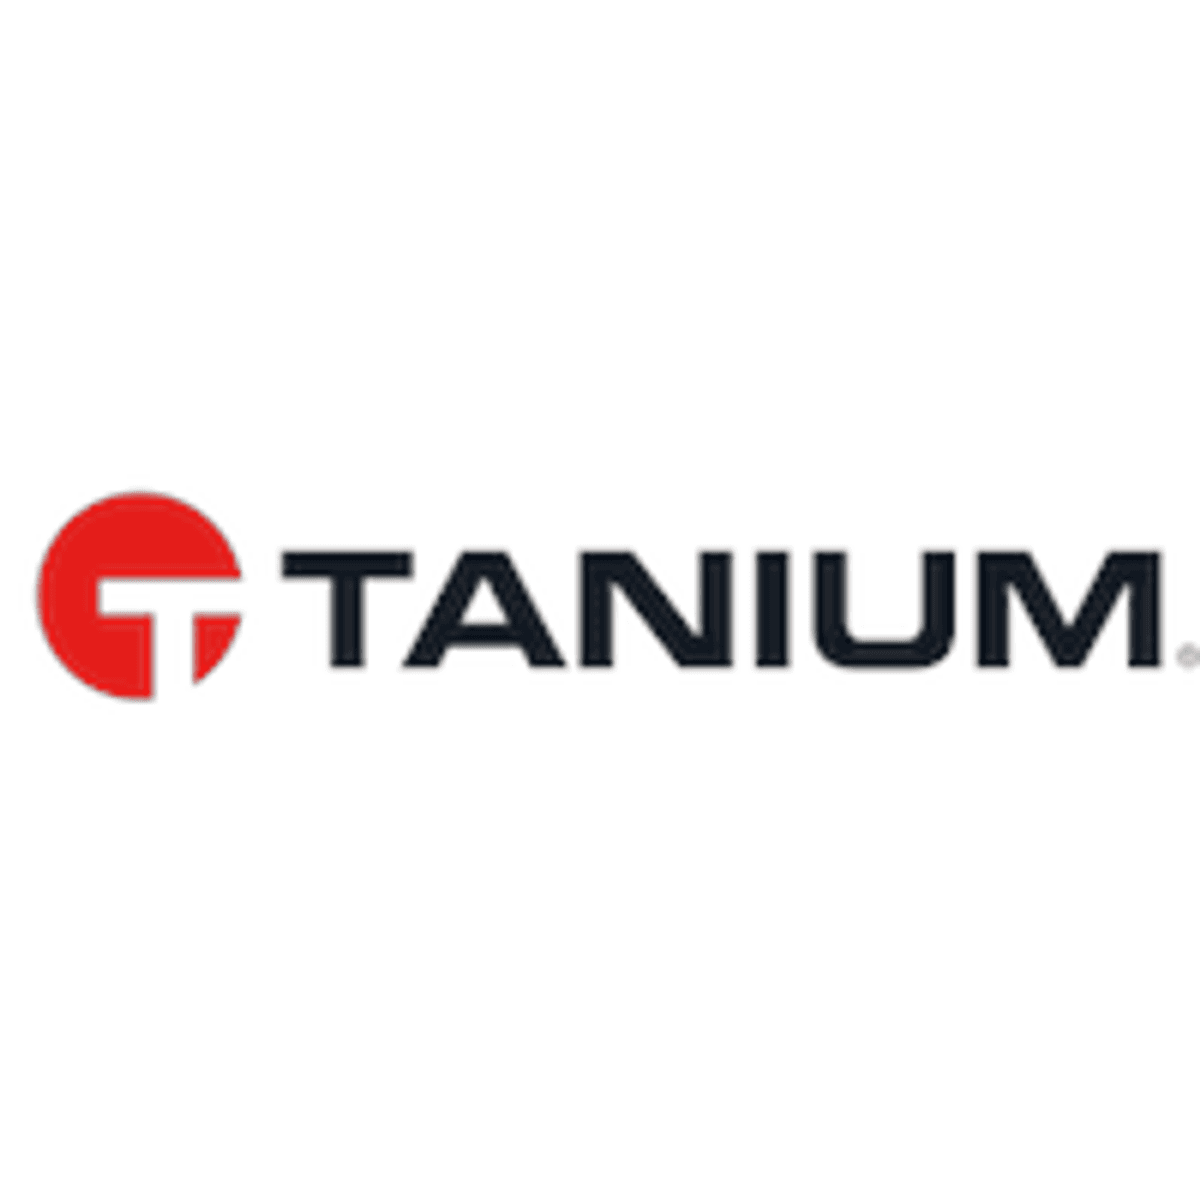 Tanium as a Service is beschikbaar via datacenter in Frankfurt image